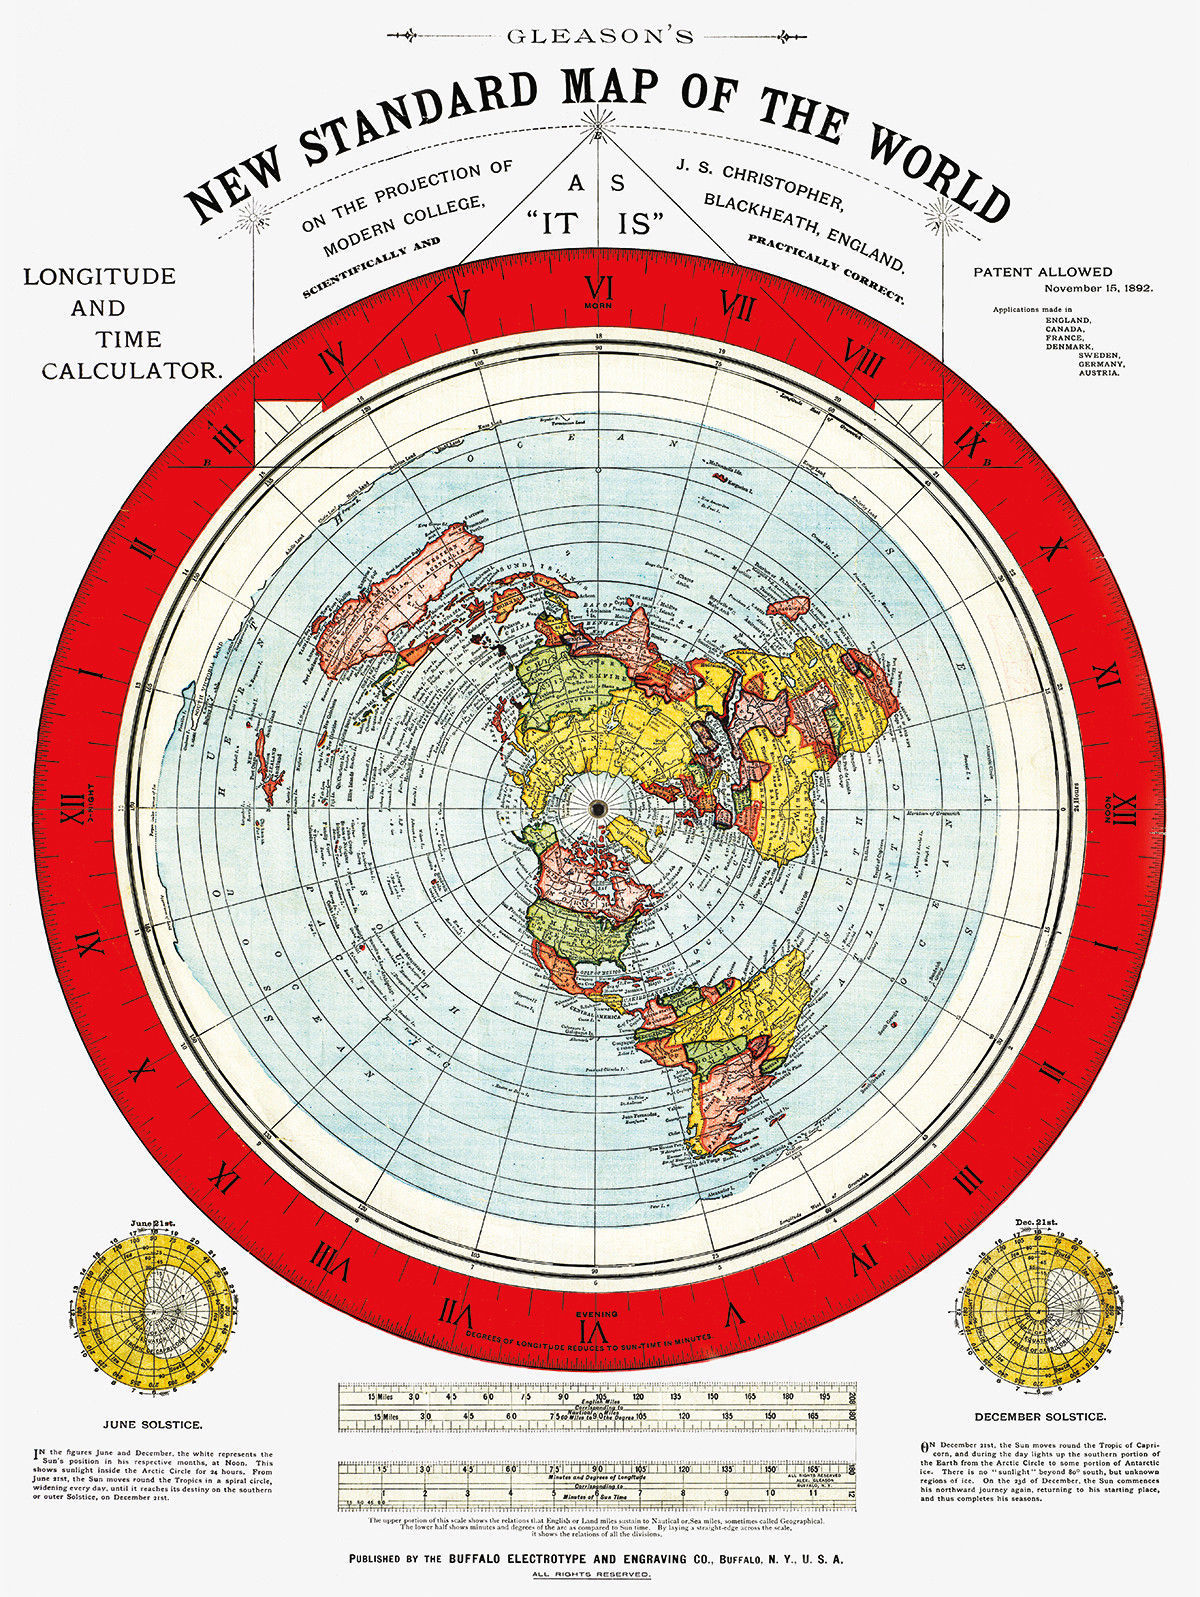 flat earth map flat earth map